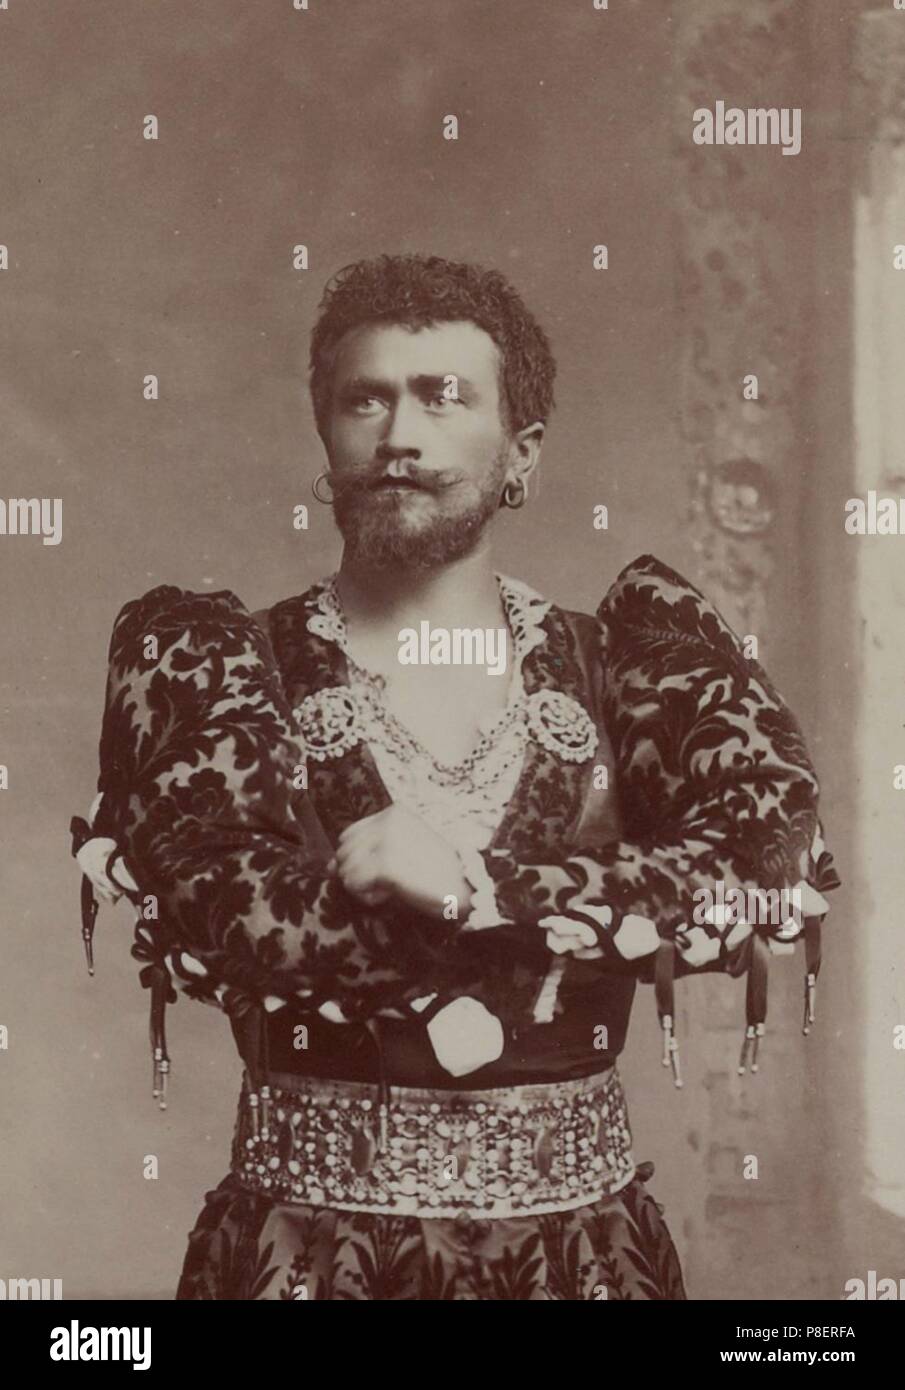 Albert Saléza (1867-1916) as Otello in Opera Otello by Giuseppe Verdi, Paris, Théâtre national de l'Opéra, 12.10.1894. Museum: PRIVATE COLLECTION. Stock Photo